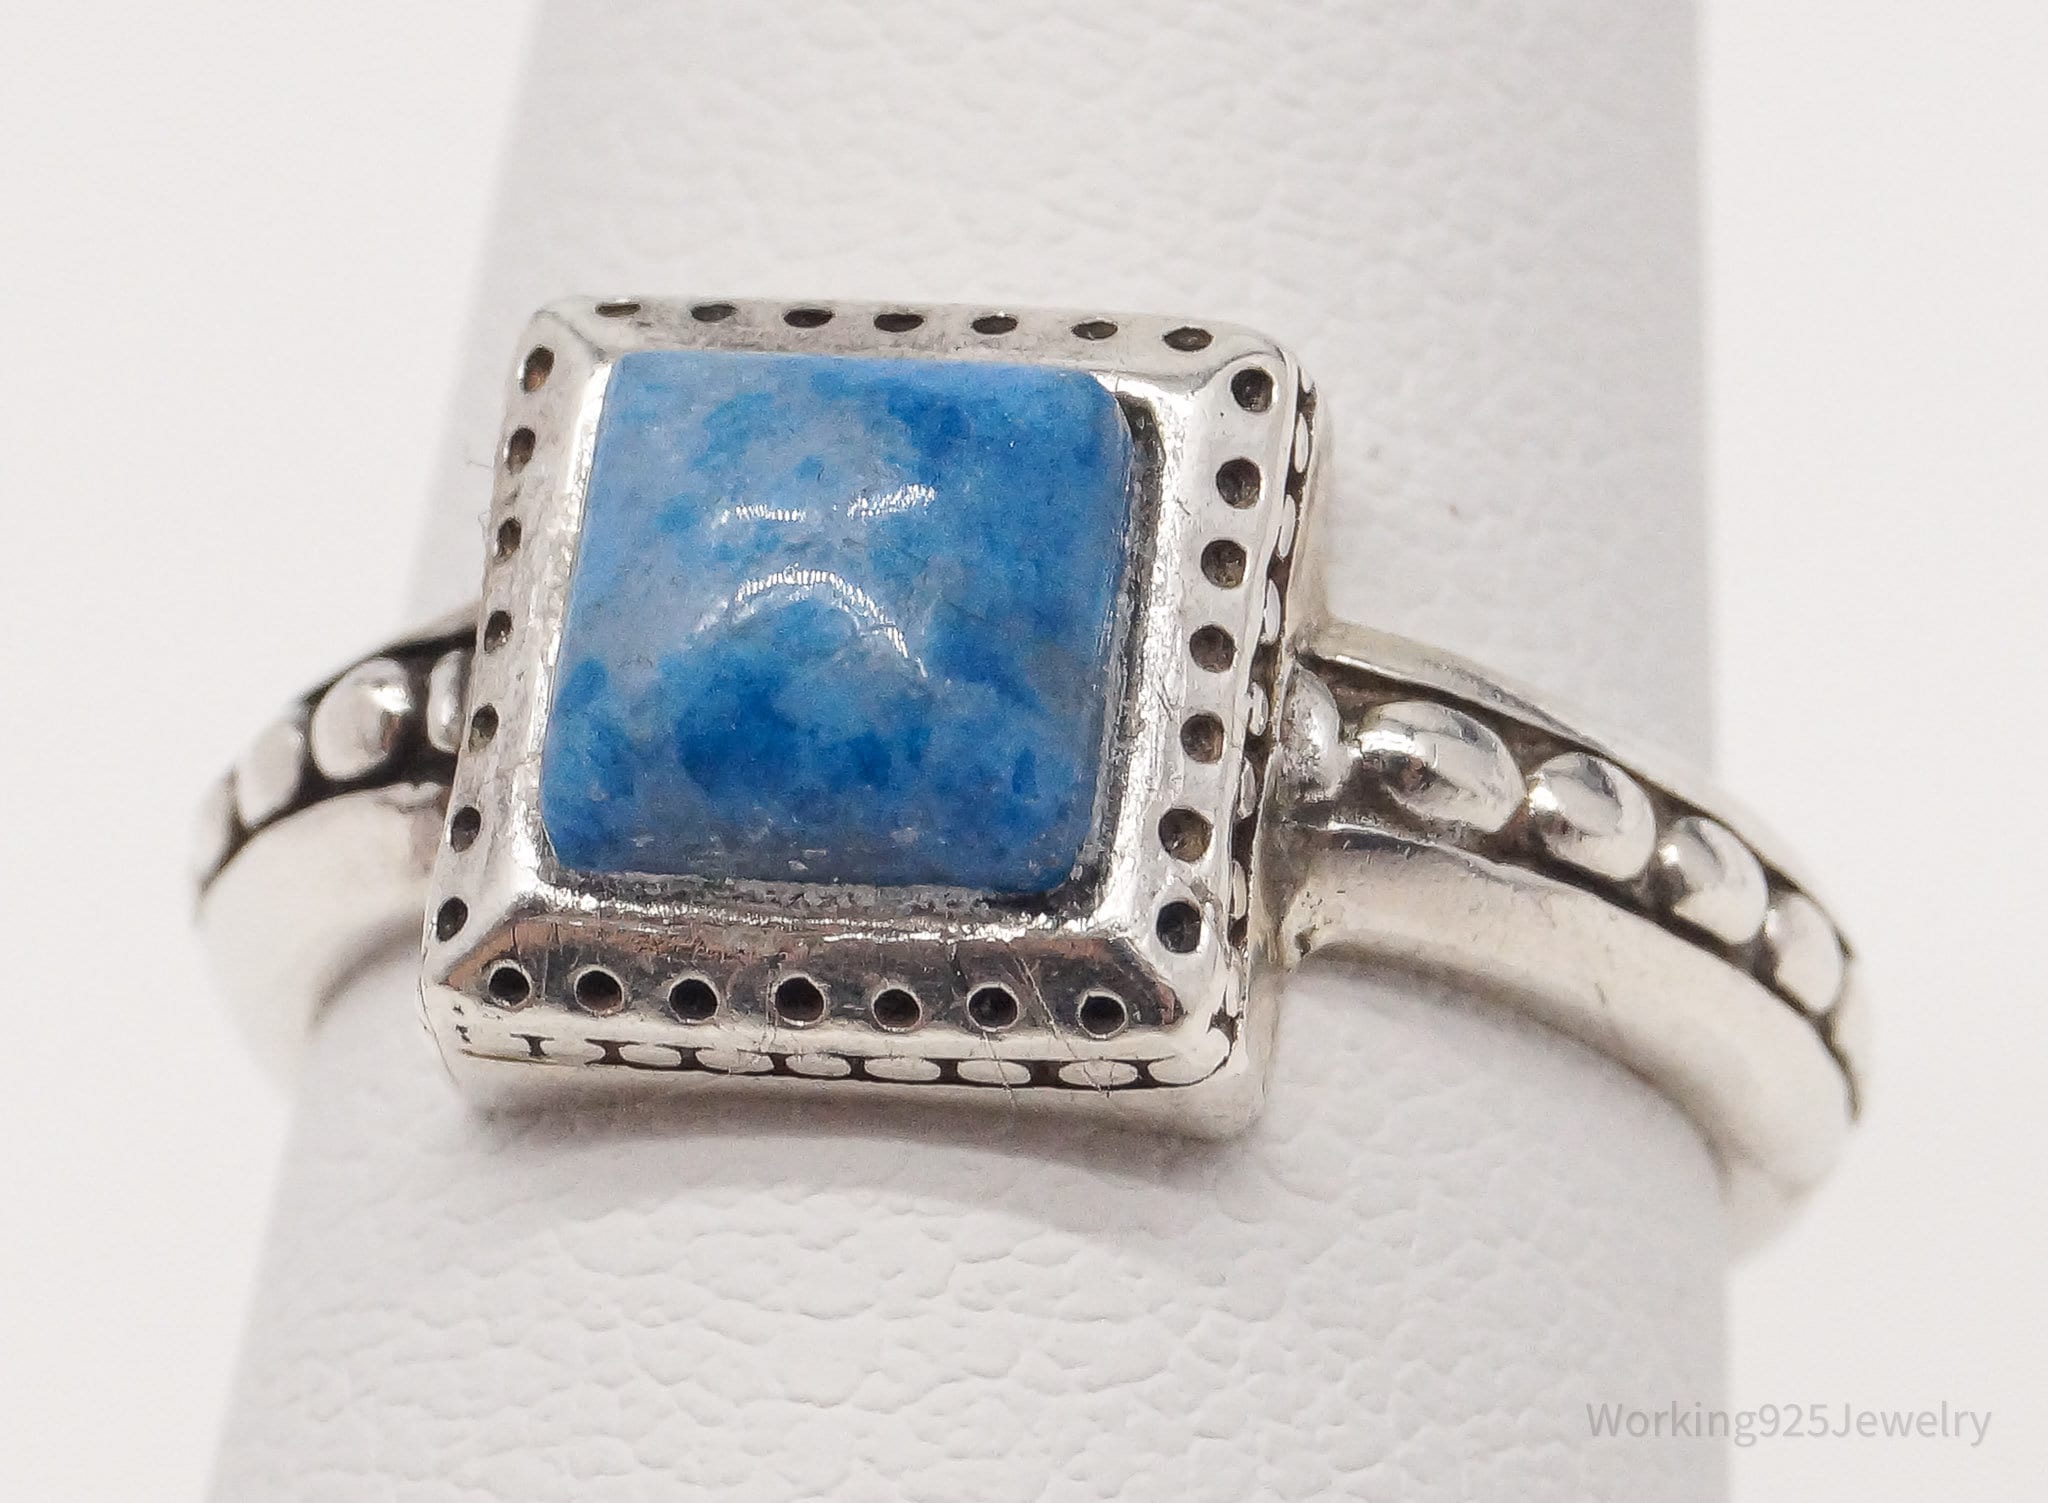 VTG Native American Carol Felley Lapis Lazuli Sterling Silver Ring - SZ 5.75